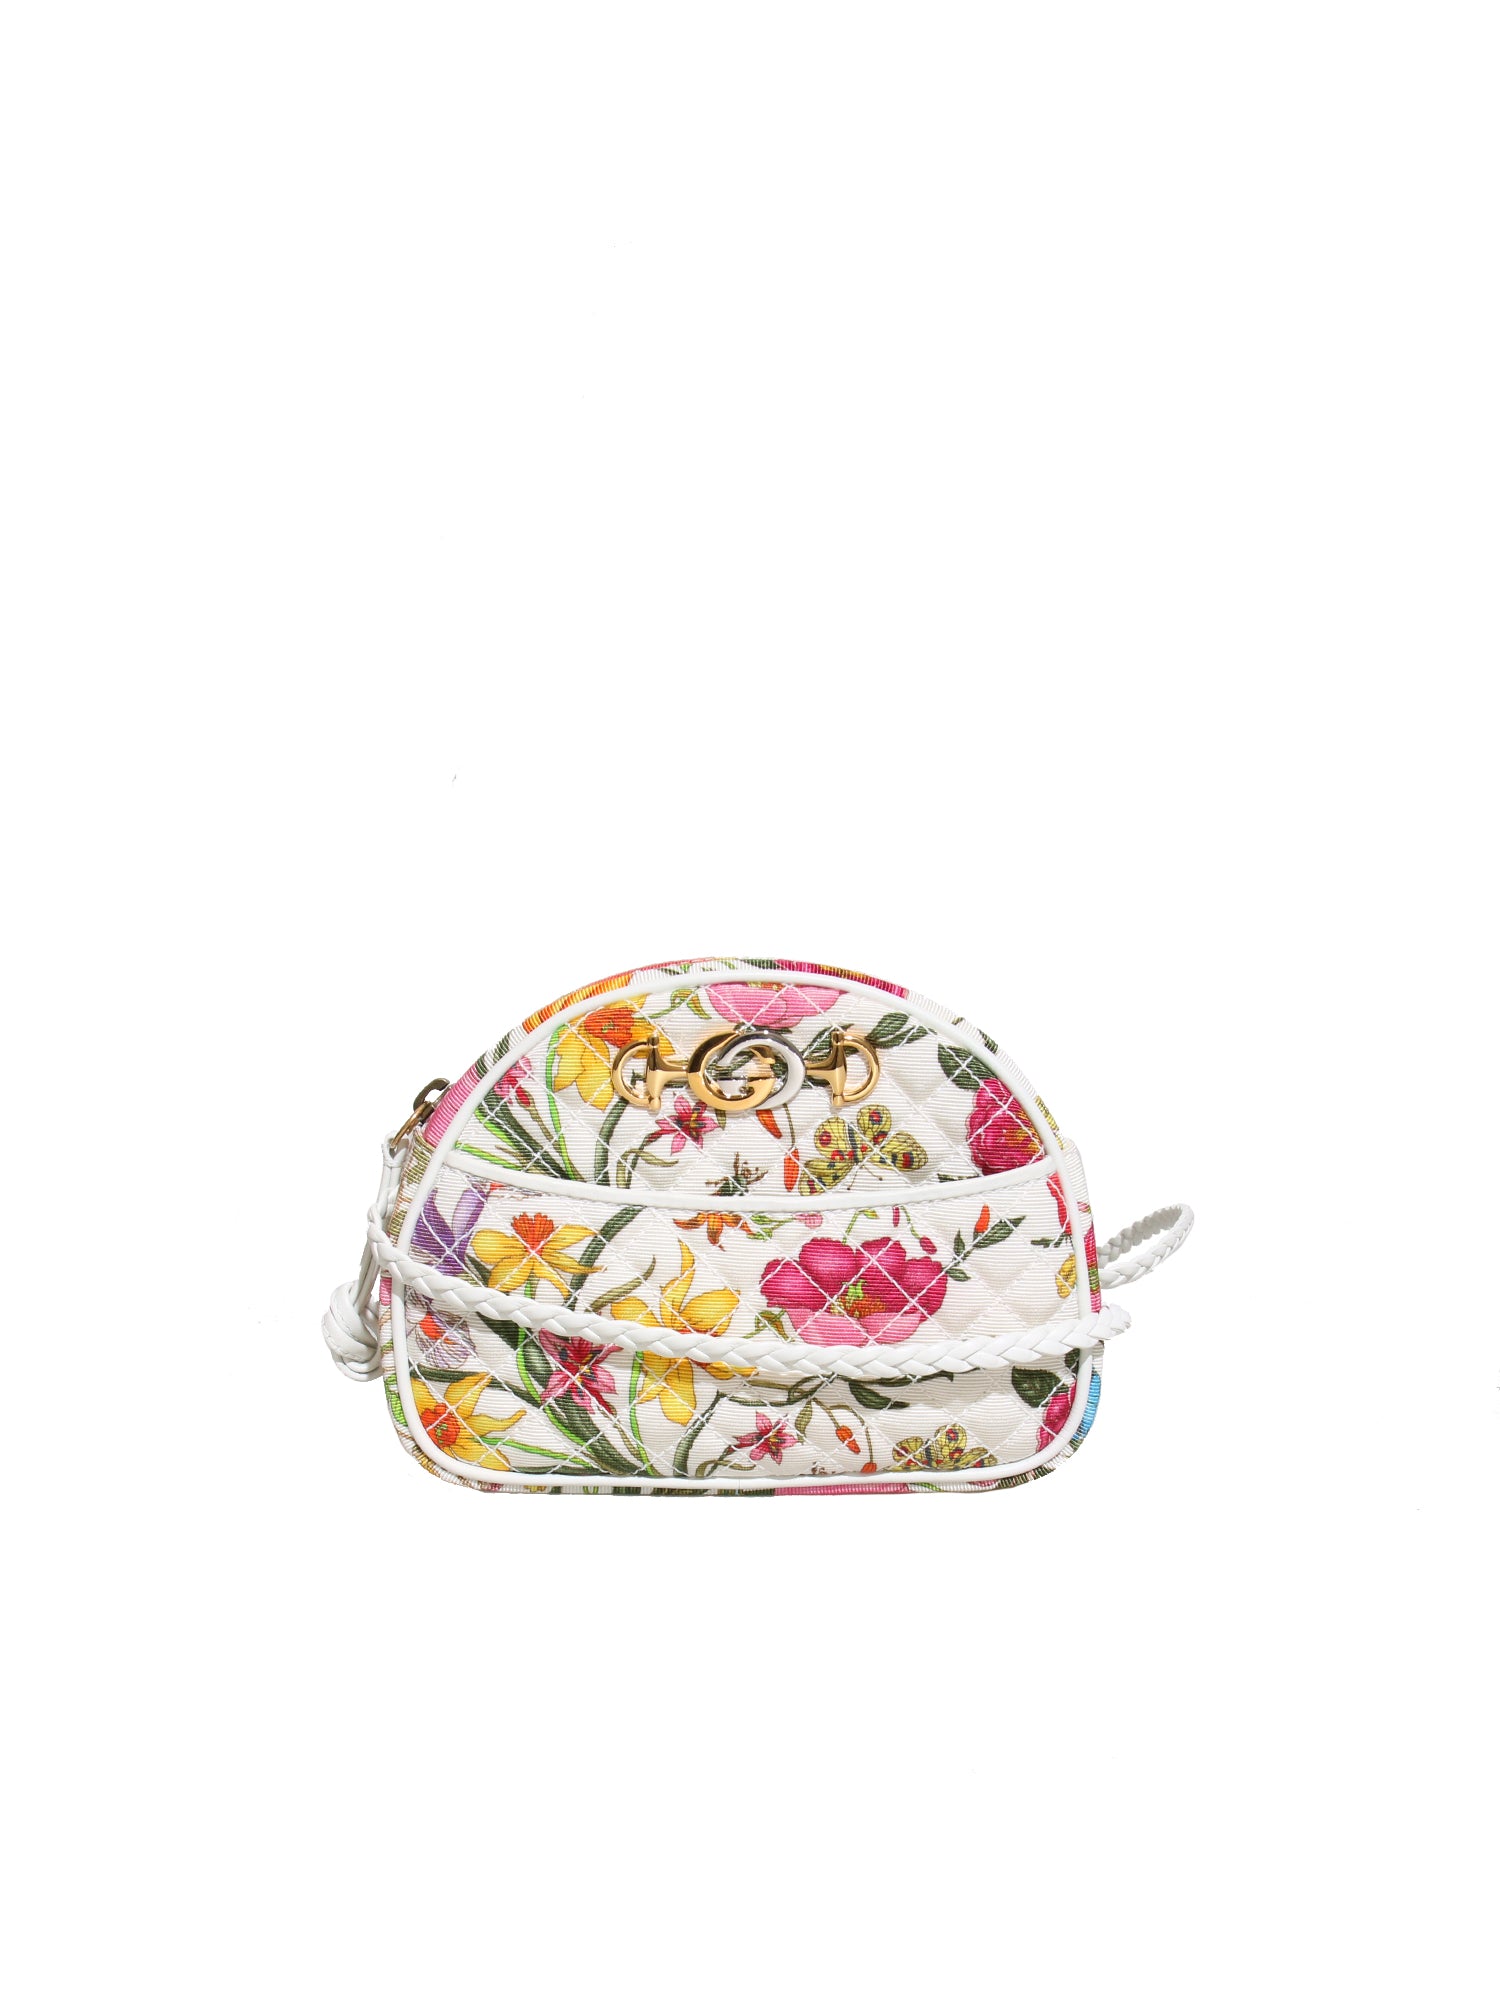 New Gucci Mini Trapuntata Quilted Floral Canvas Cross Body Bag – Sabrina's  Closet